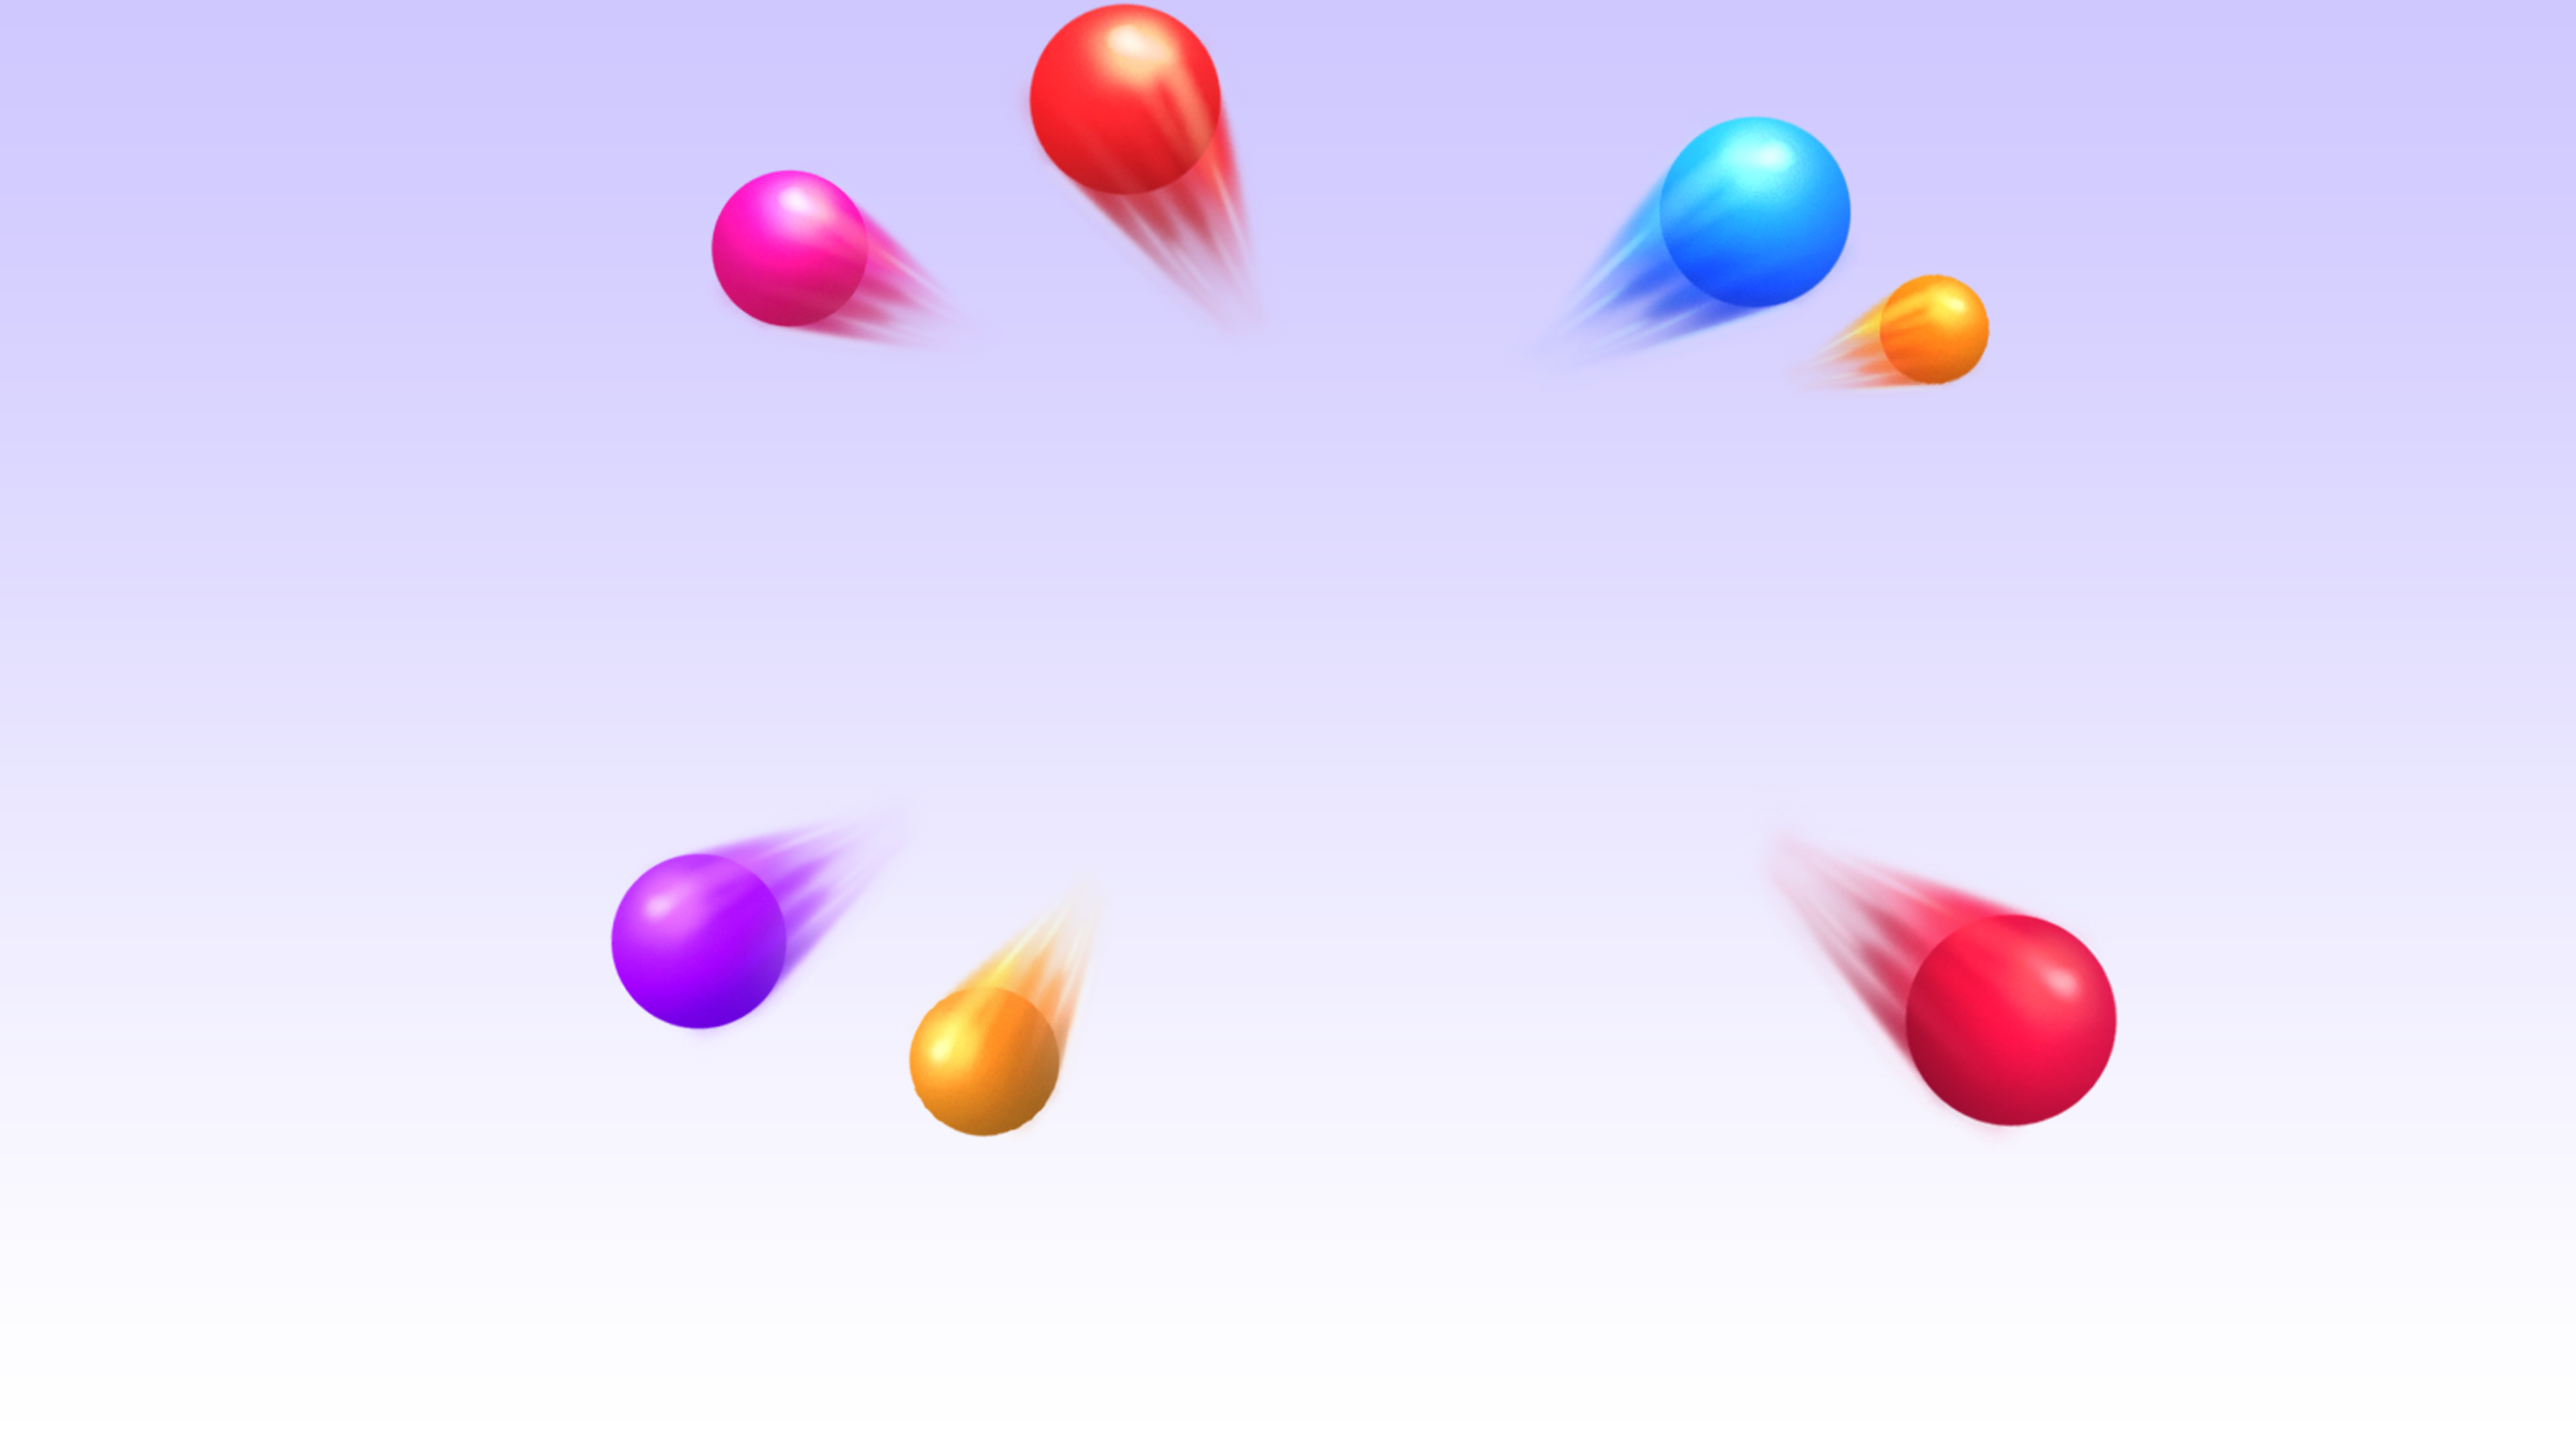 Jogo Clássico Bubble Shooter – Apps no Google Play